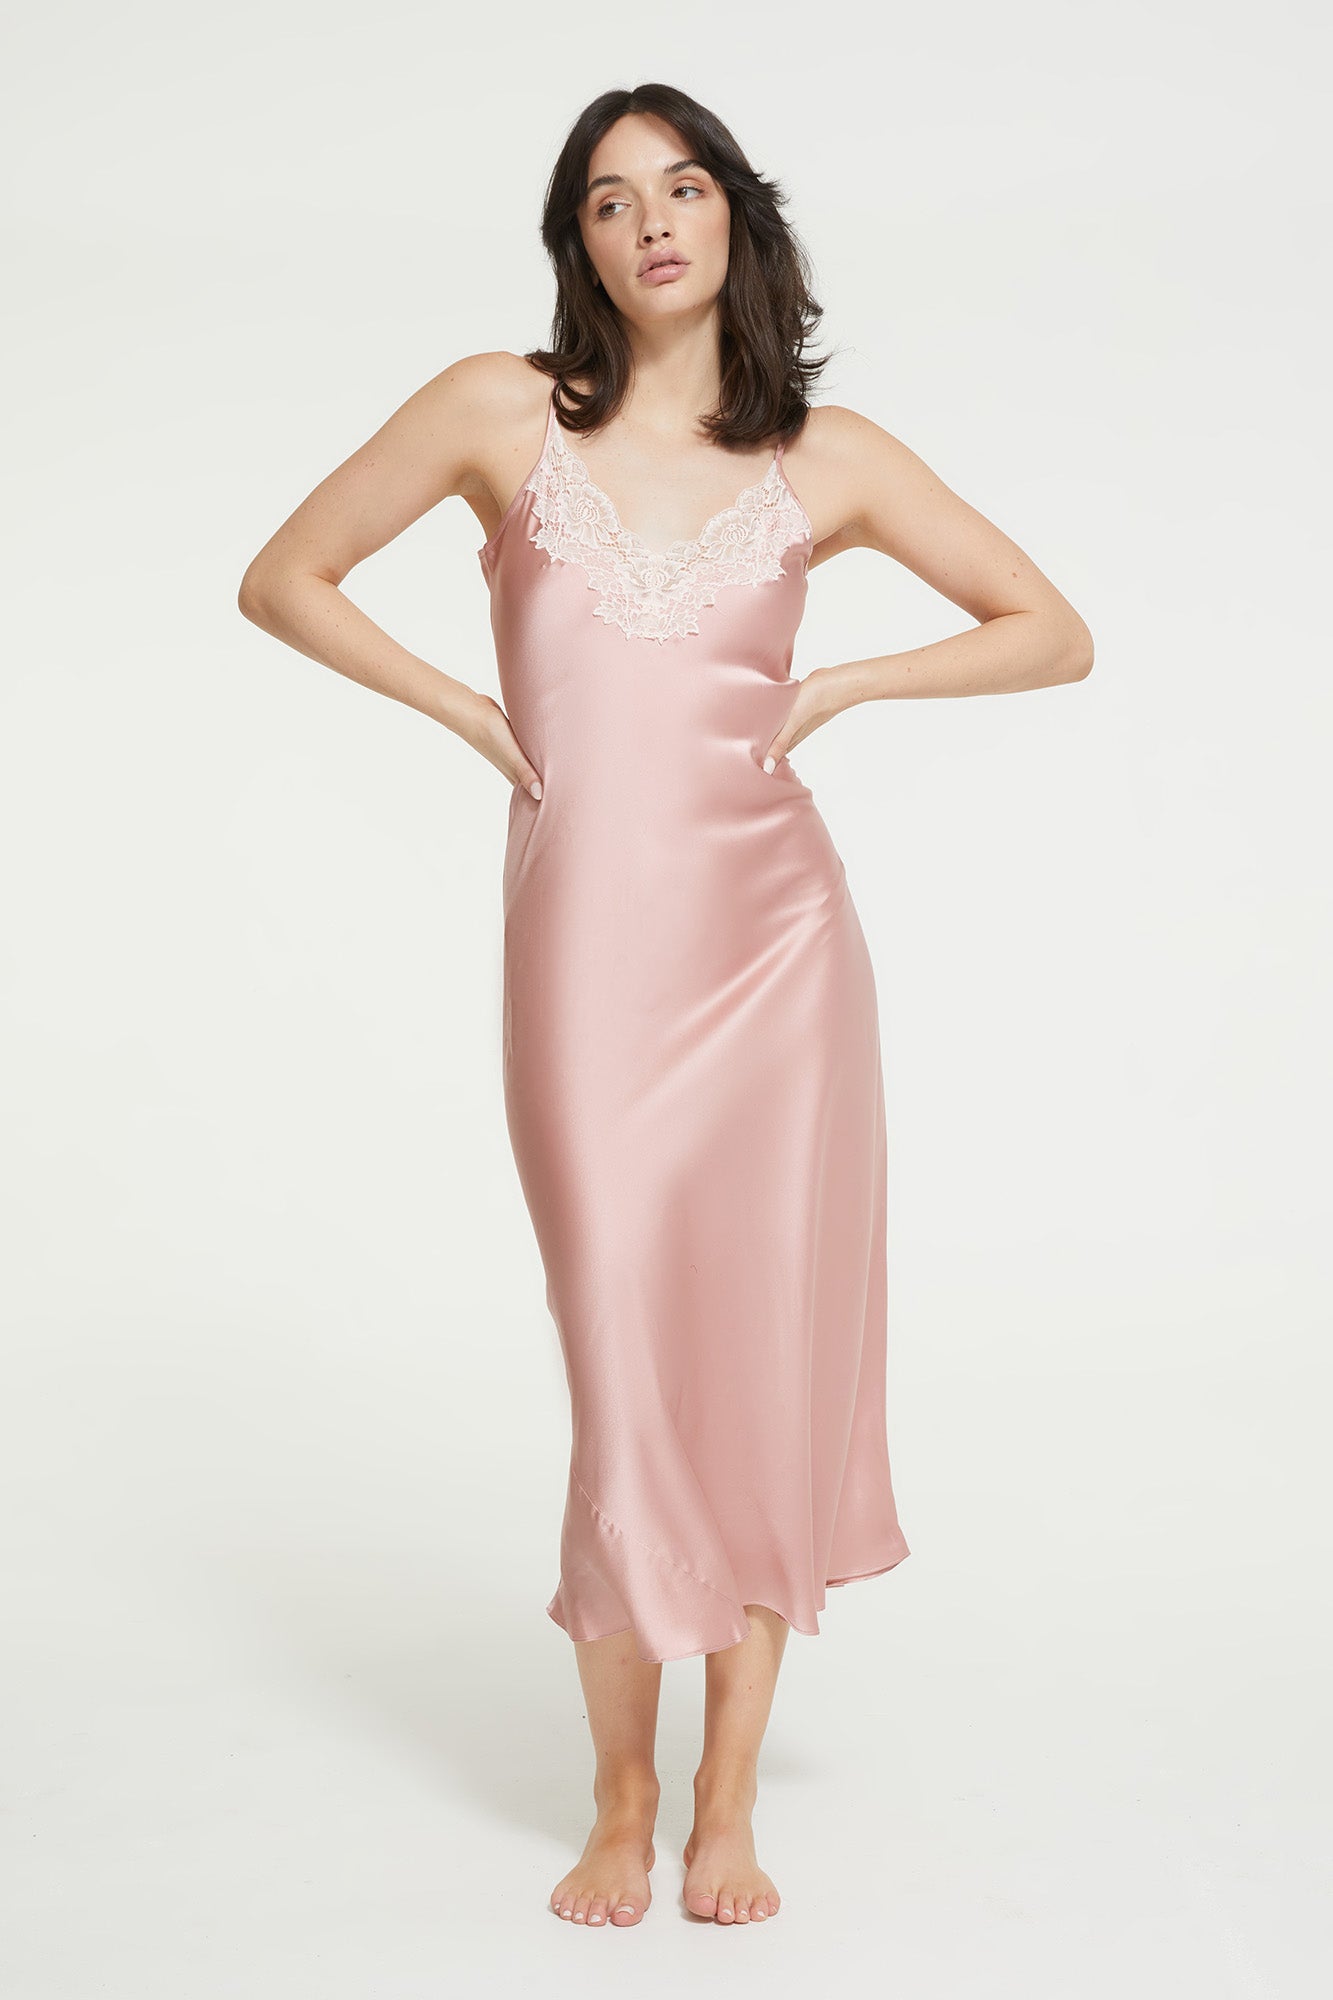 Lace Silk Lace Slip in Bridal Rose - 100% Silk | GINIA